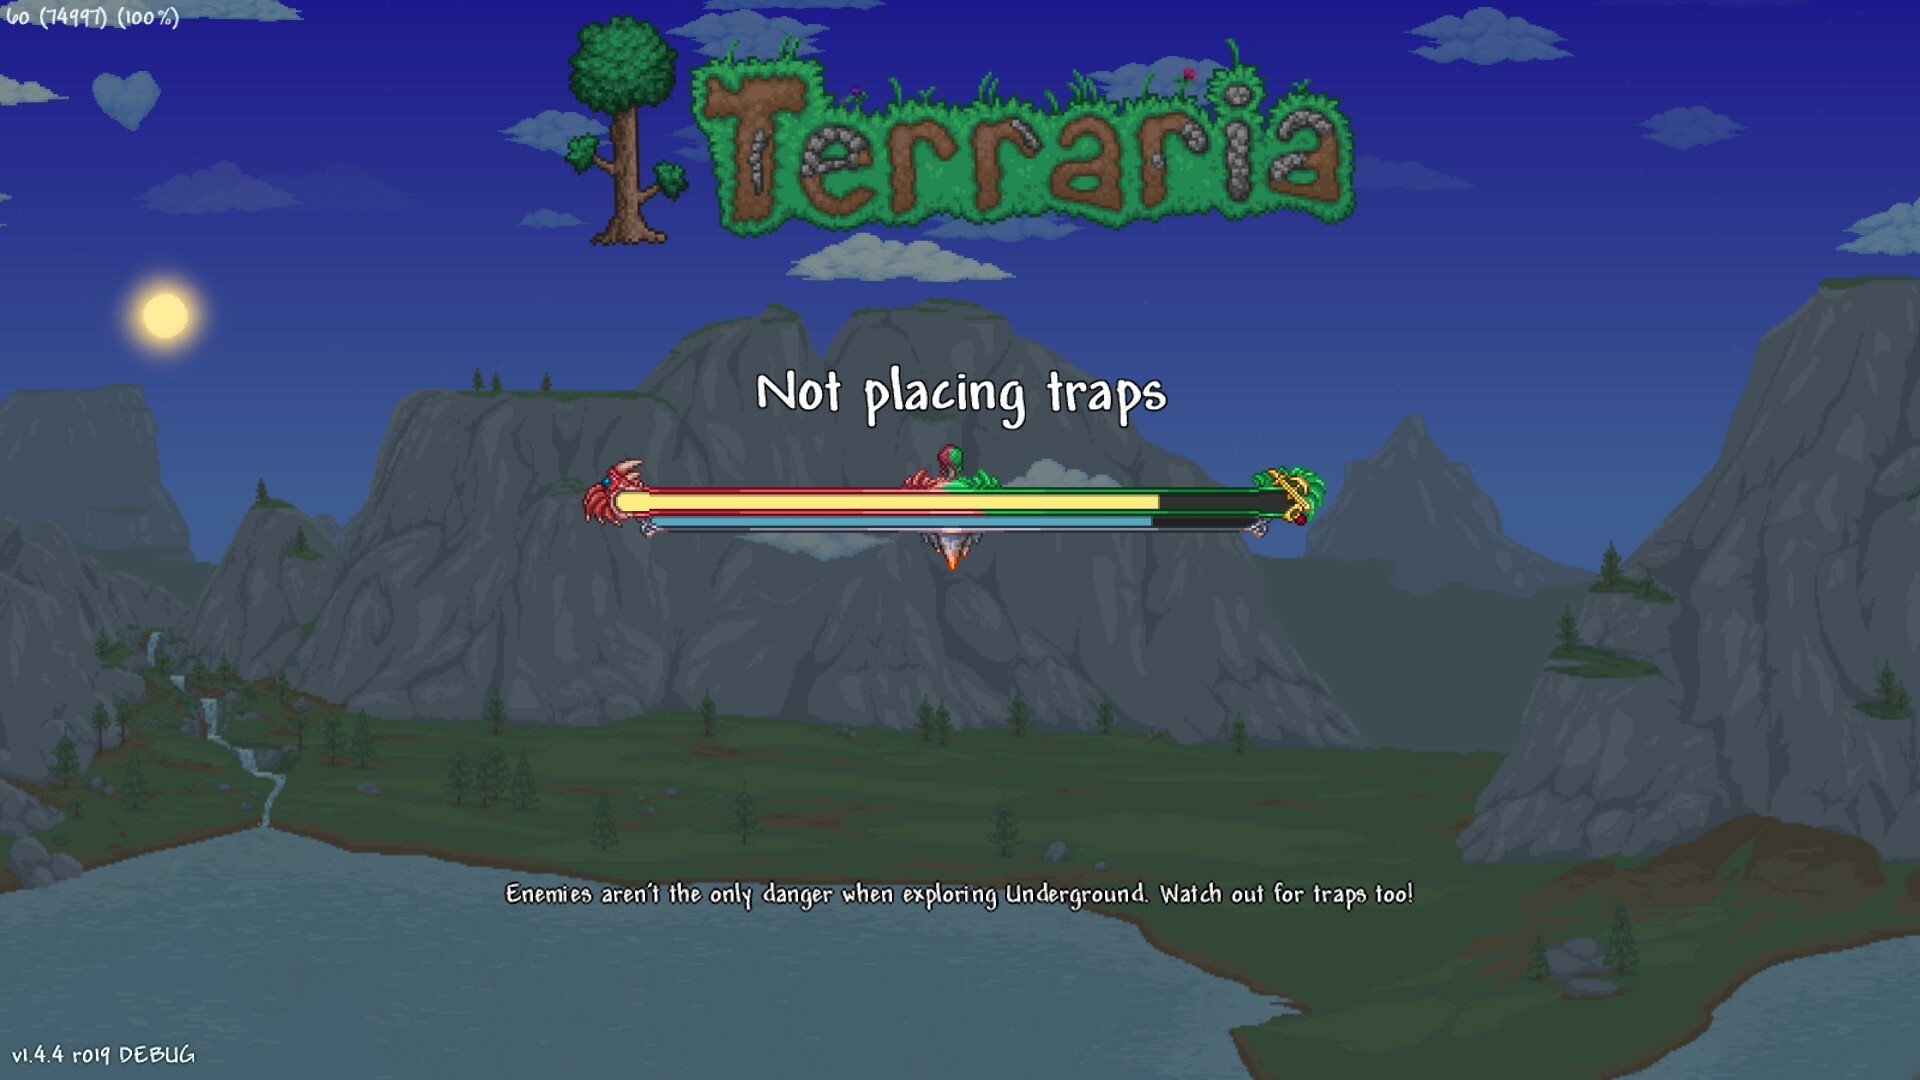 Terraria - Terraria 1.4.3.3 - Steam Deck Optimization Update Release Notes  - Steam News